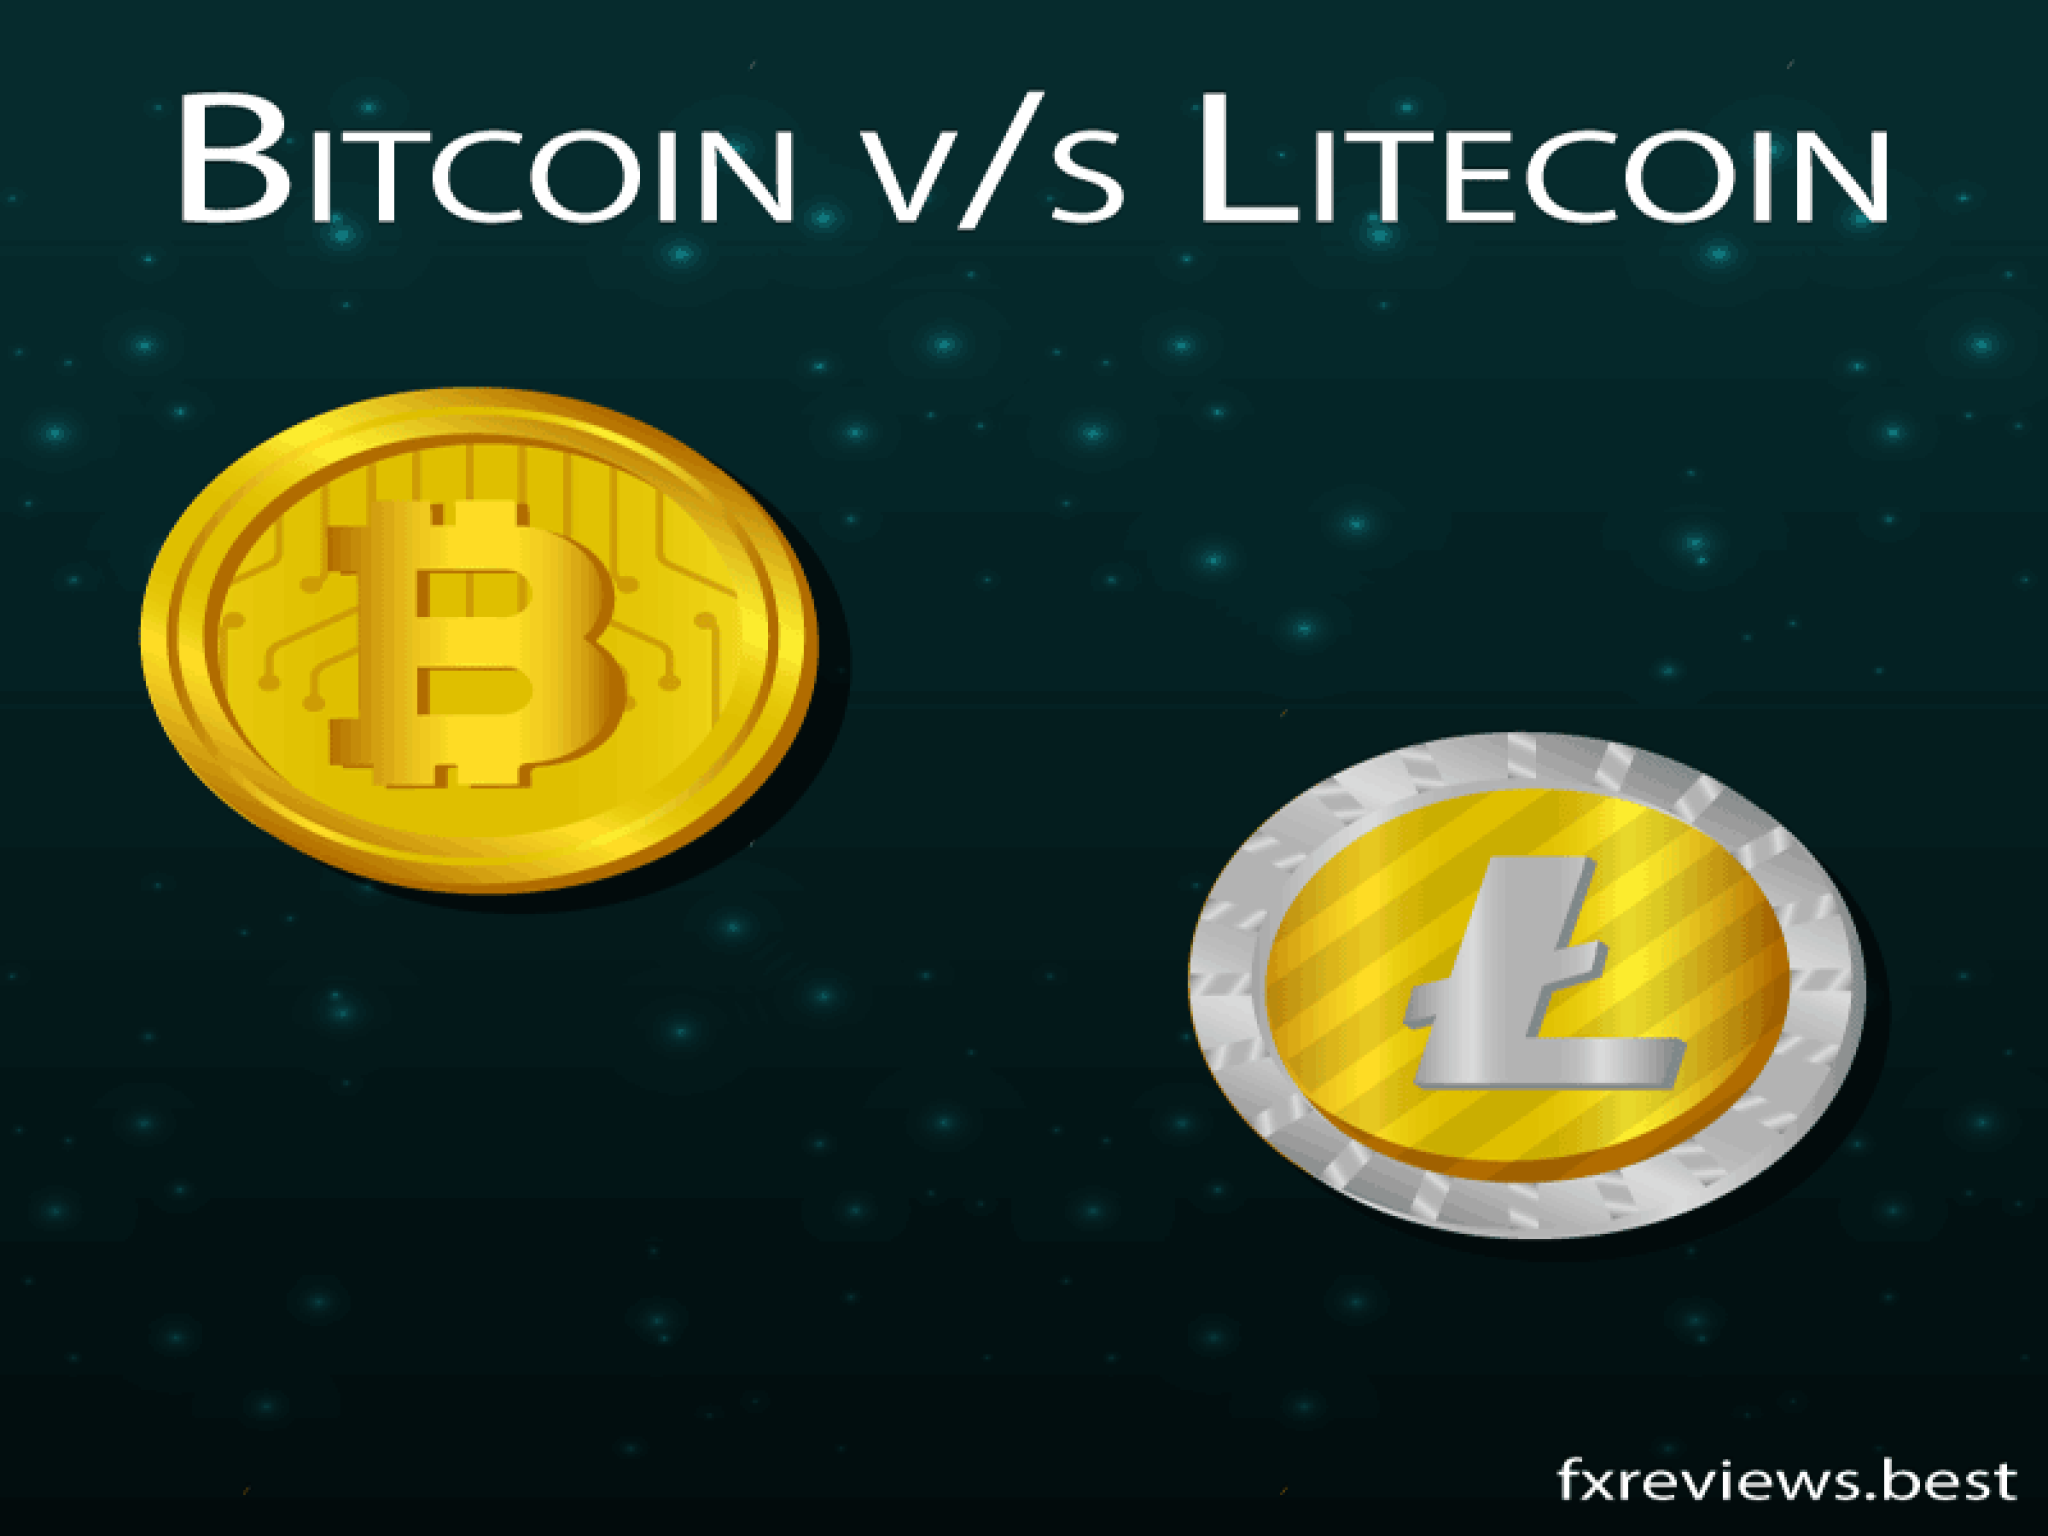 litecoin technology vs bitcoin